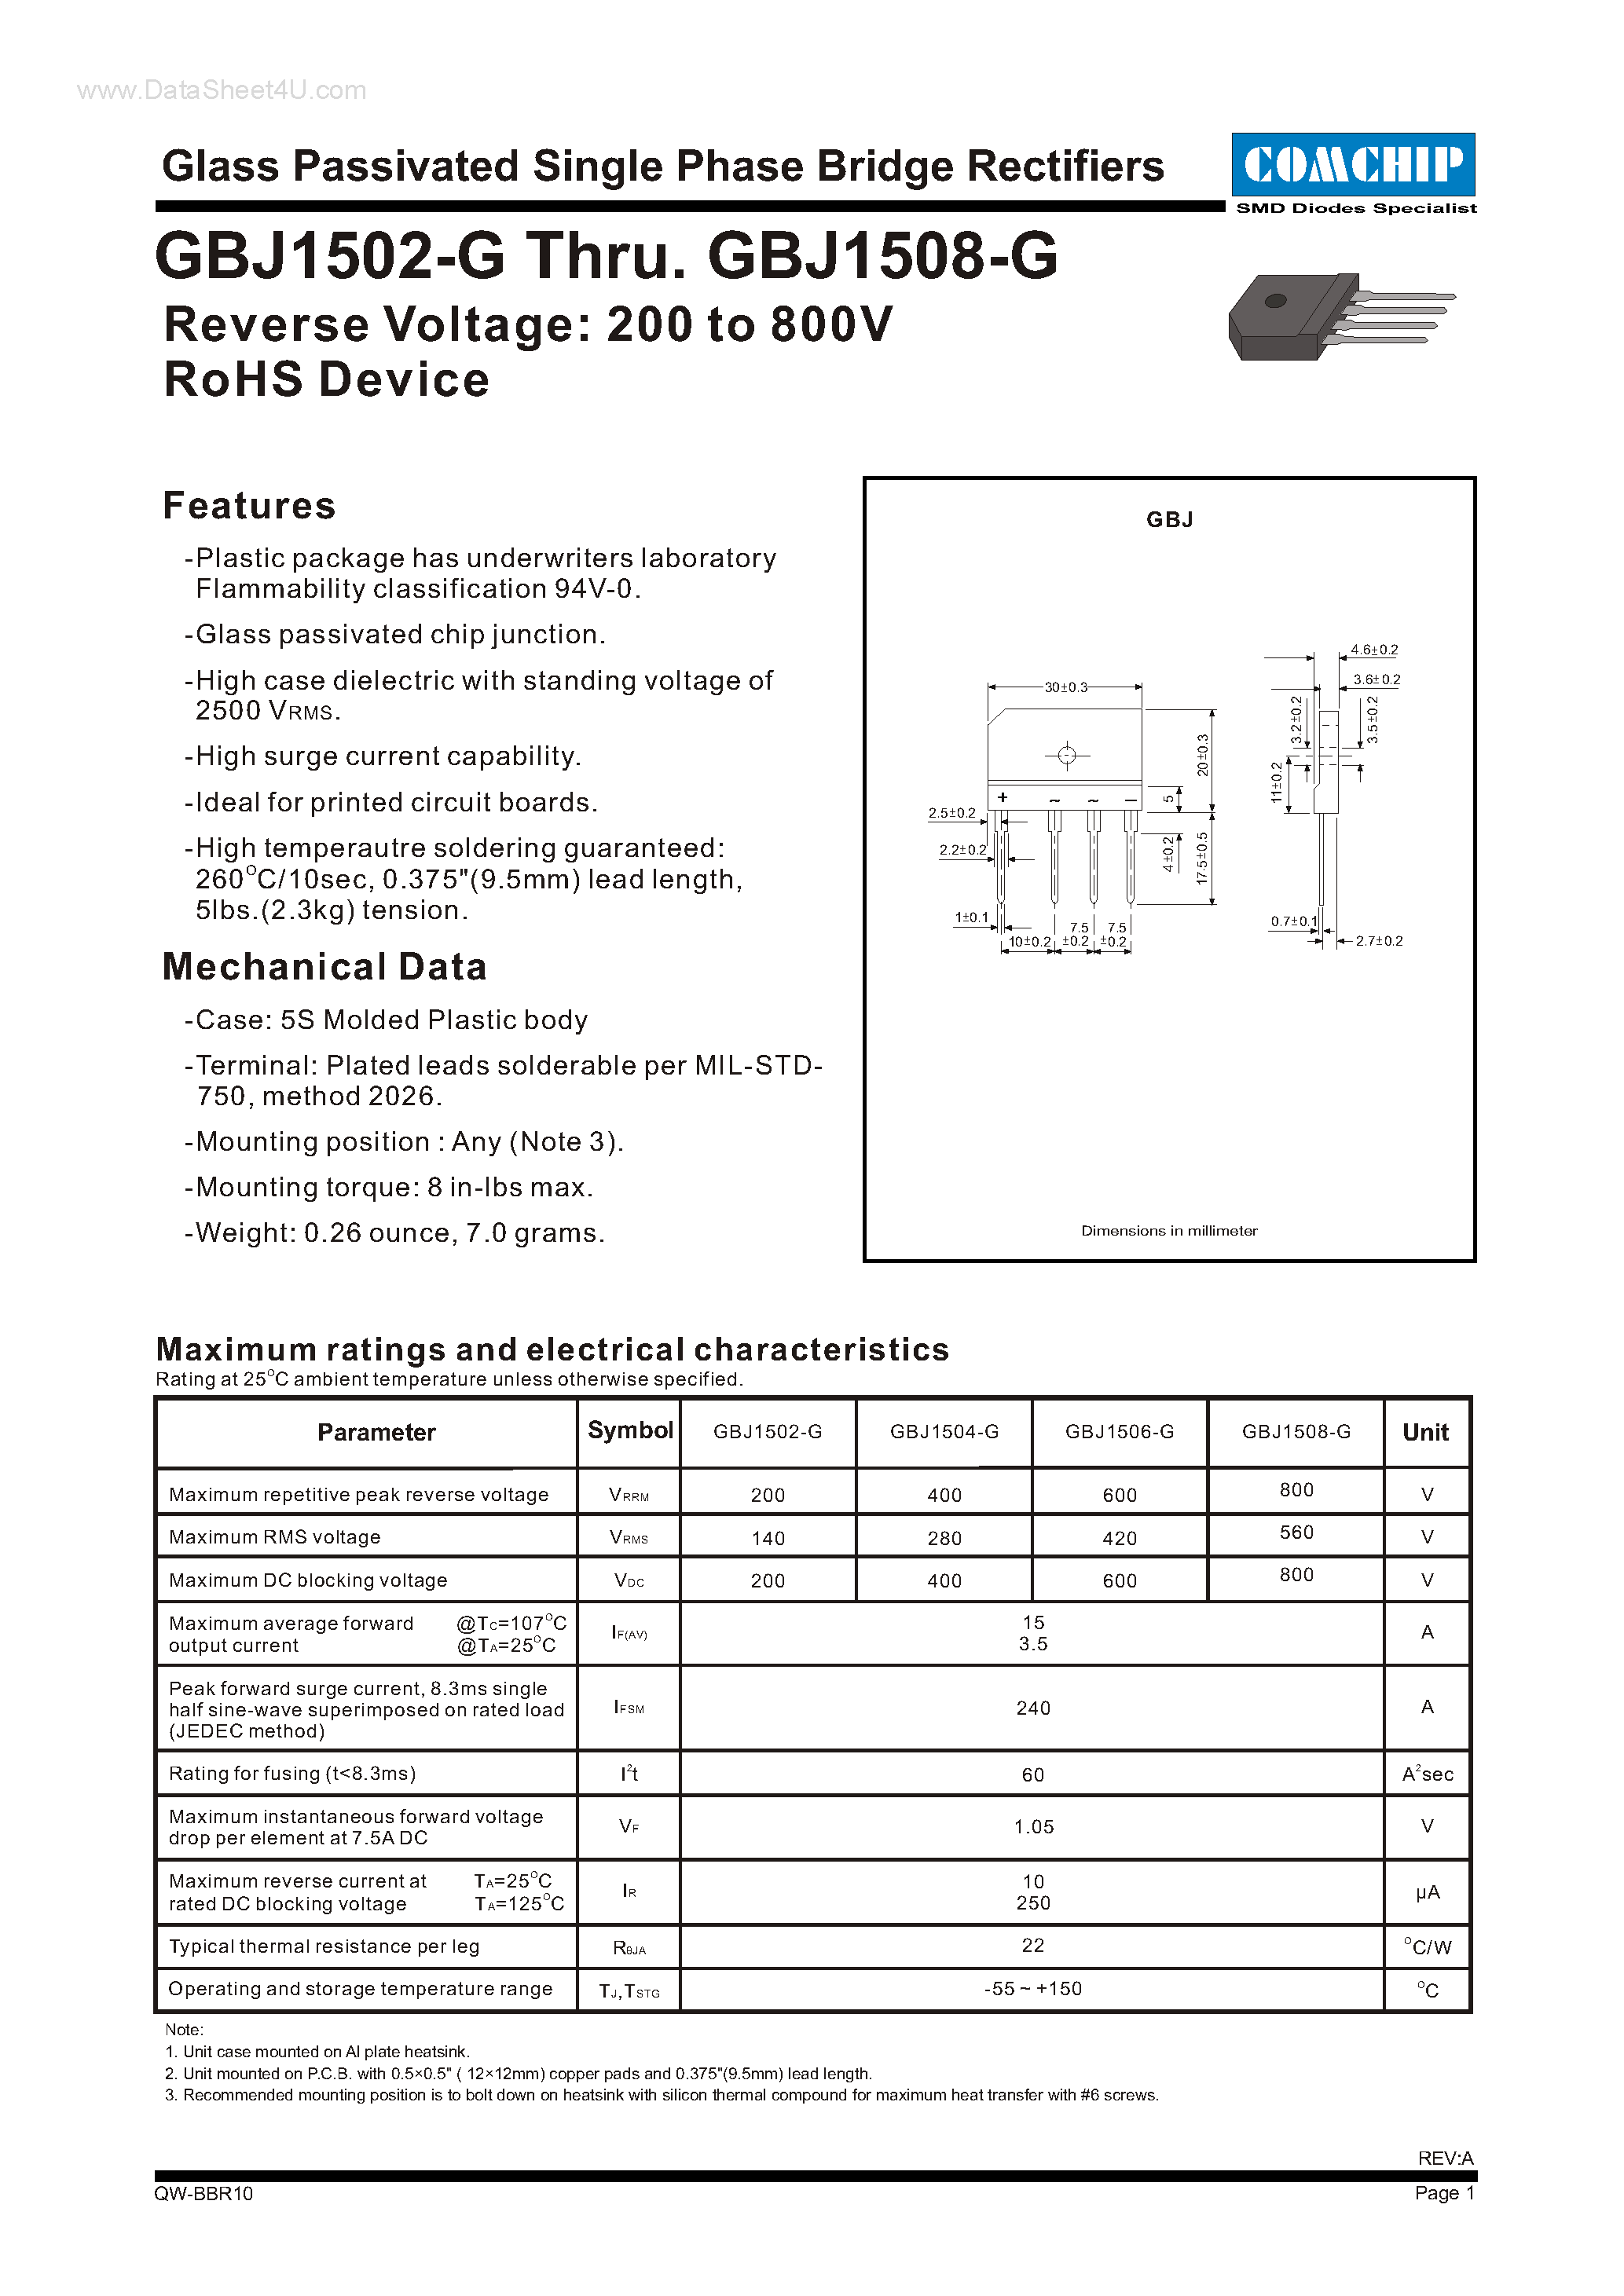 Datasheet GBJ1502-G - (GBJ1502-G - GBJ1508-G) Glass Passivated SINGLE PHASE BRIDGE Rectifier page 1